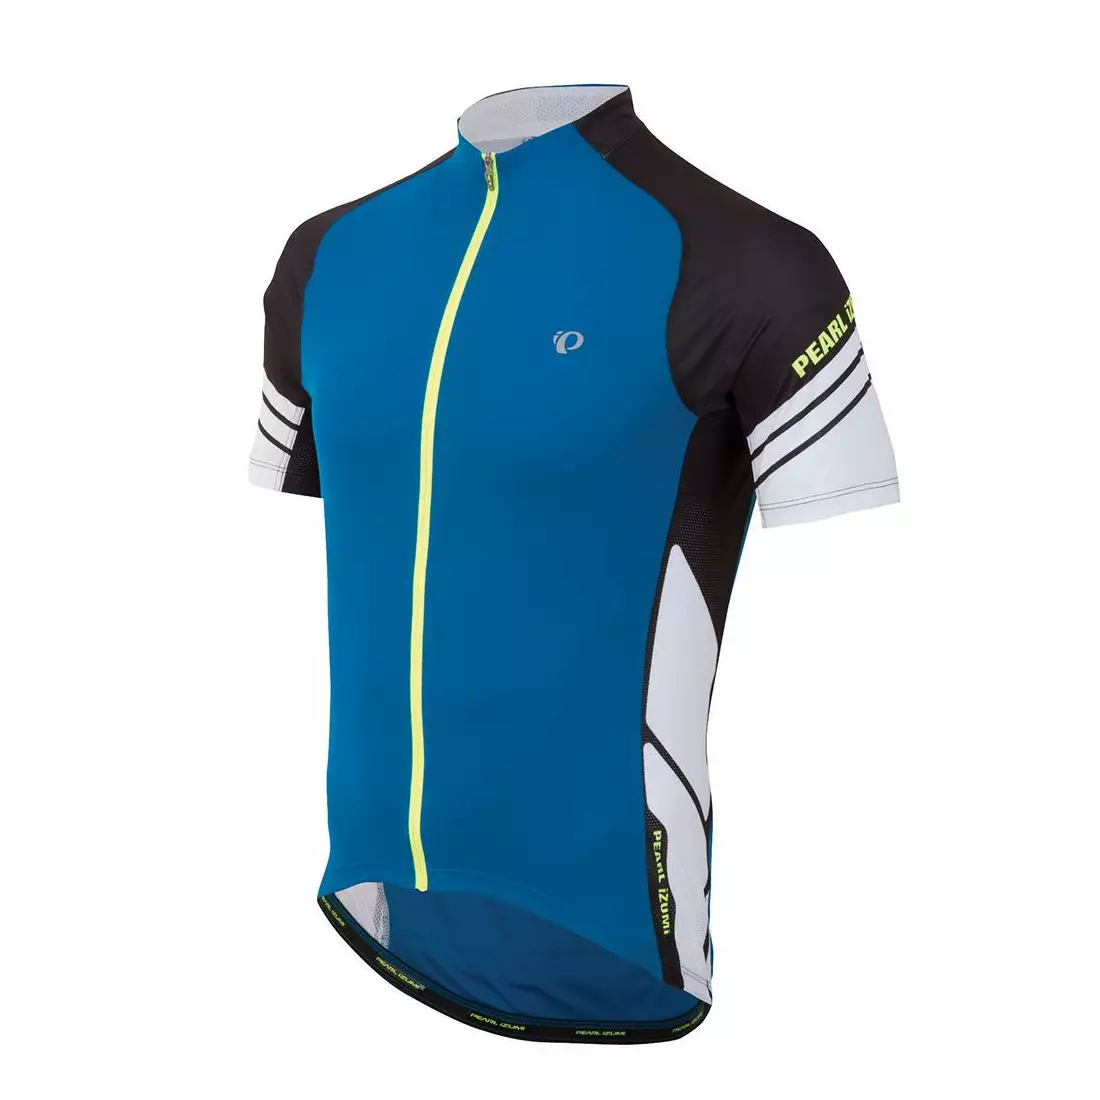 PEARL IZUMI - ELITE 11121301-4EM - light cycling jersey, color: Blue-black